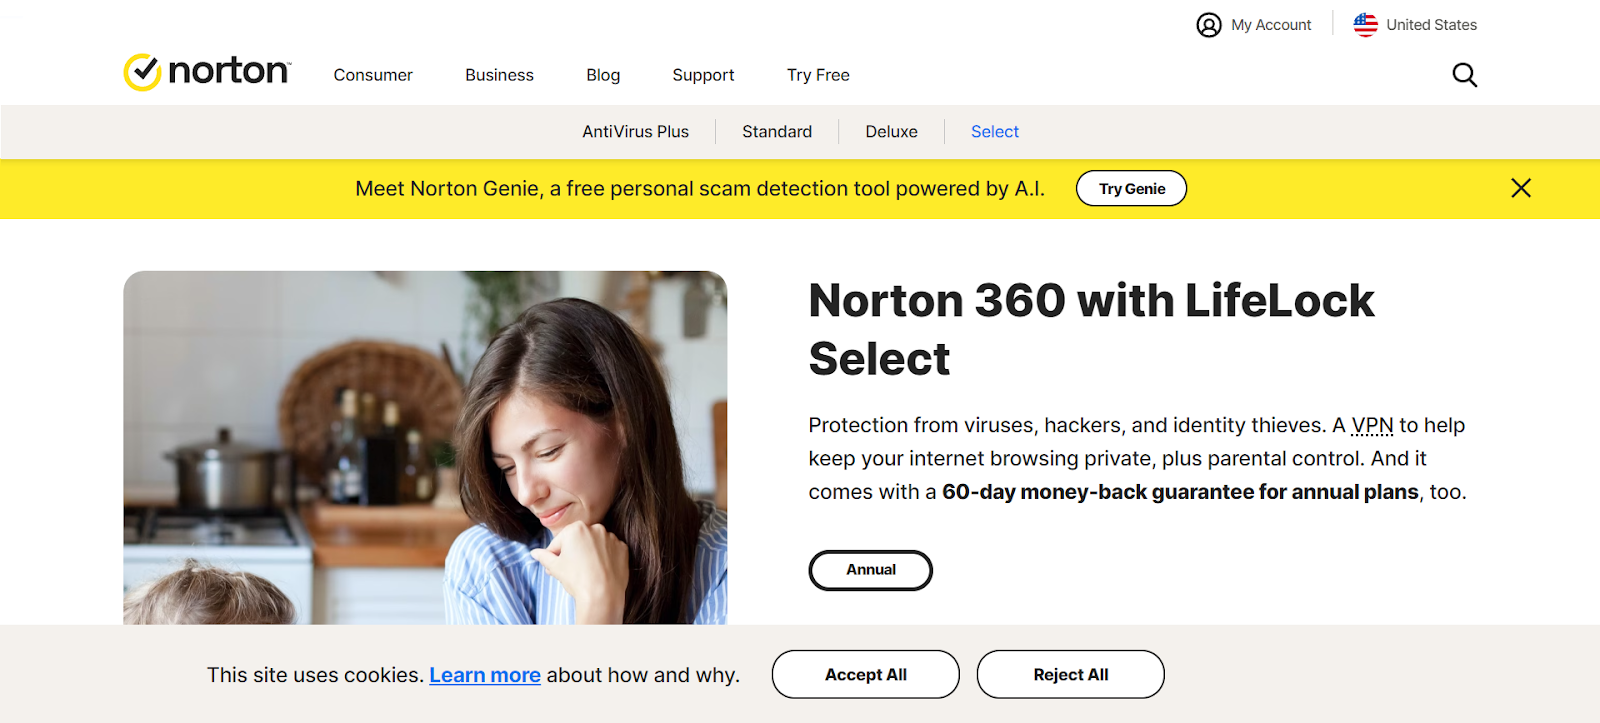 A screenshot of Norton 360 with LifeLock's website